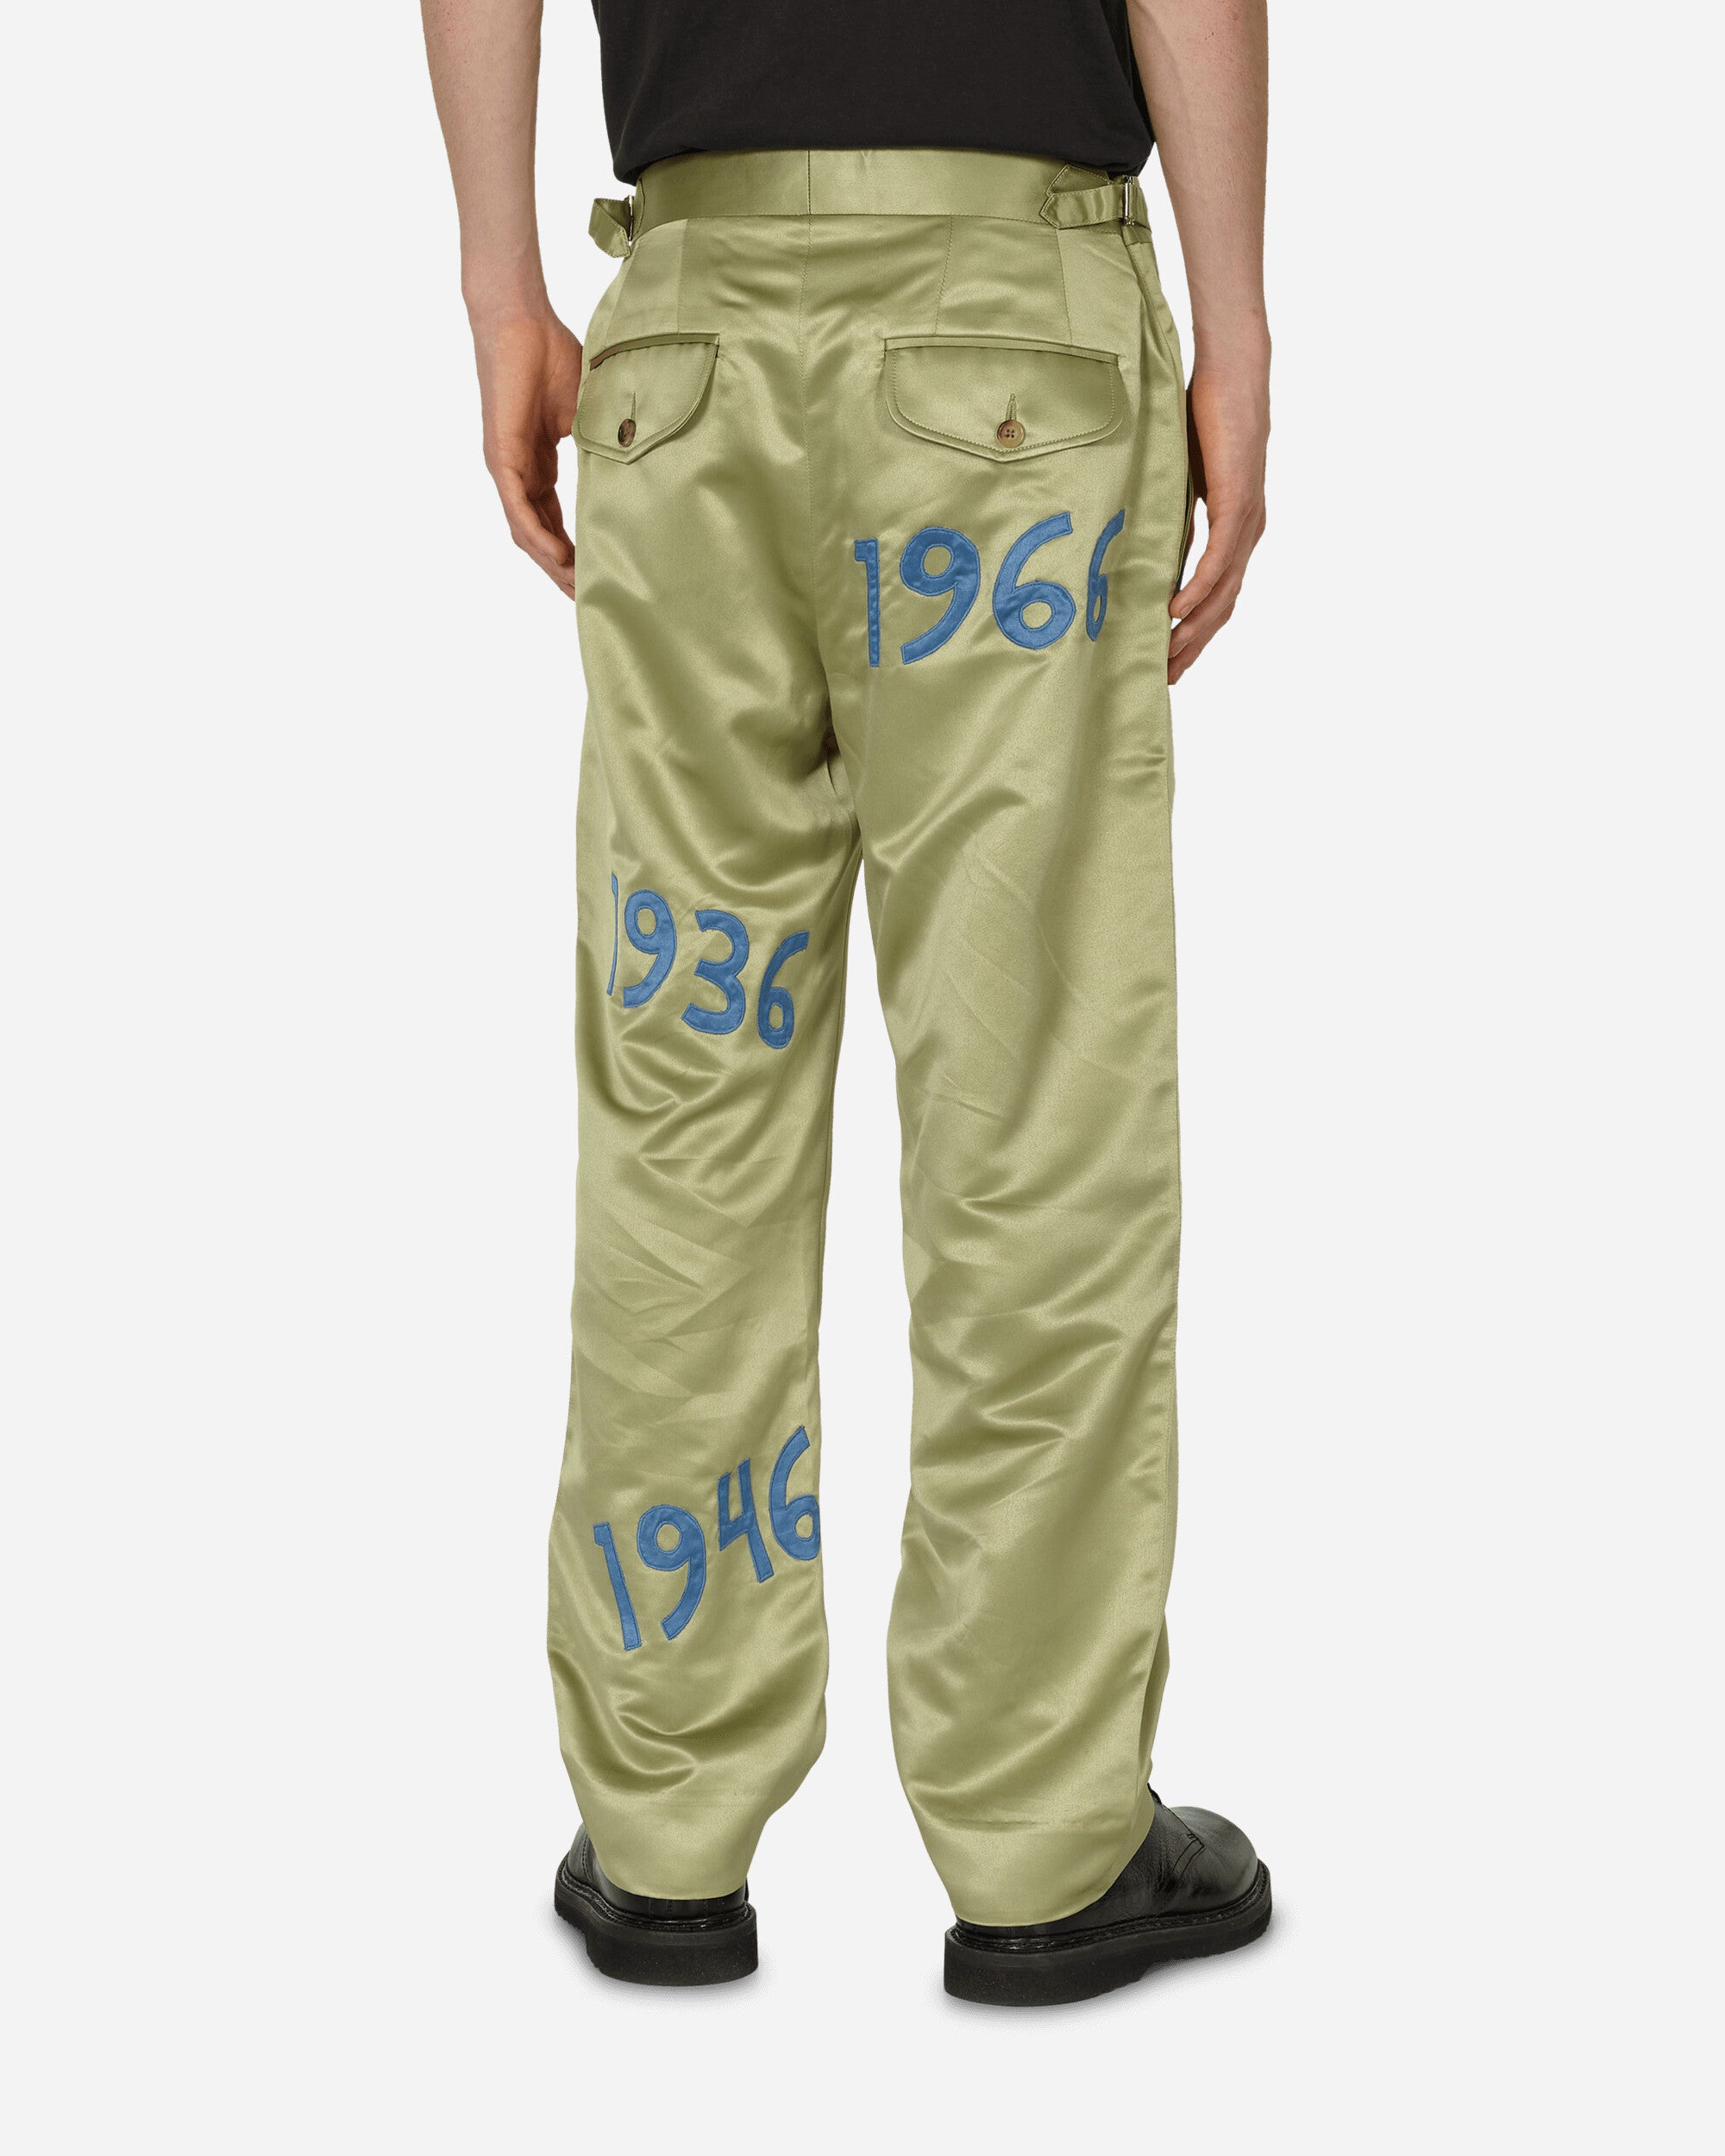 Bode Decades Trouser Green Pants Trousers MRF23BT035 1